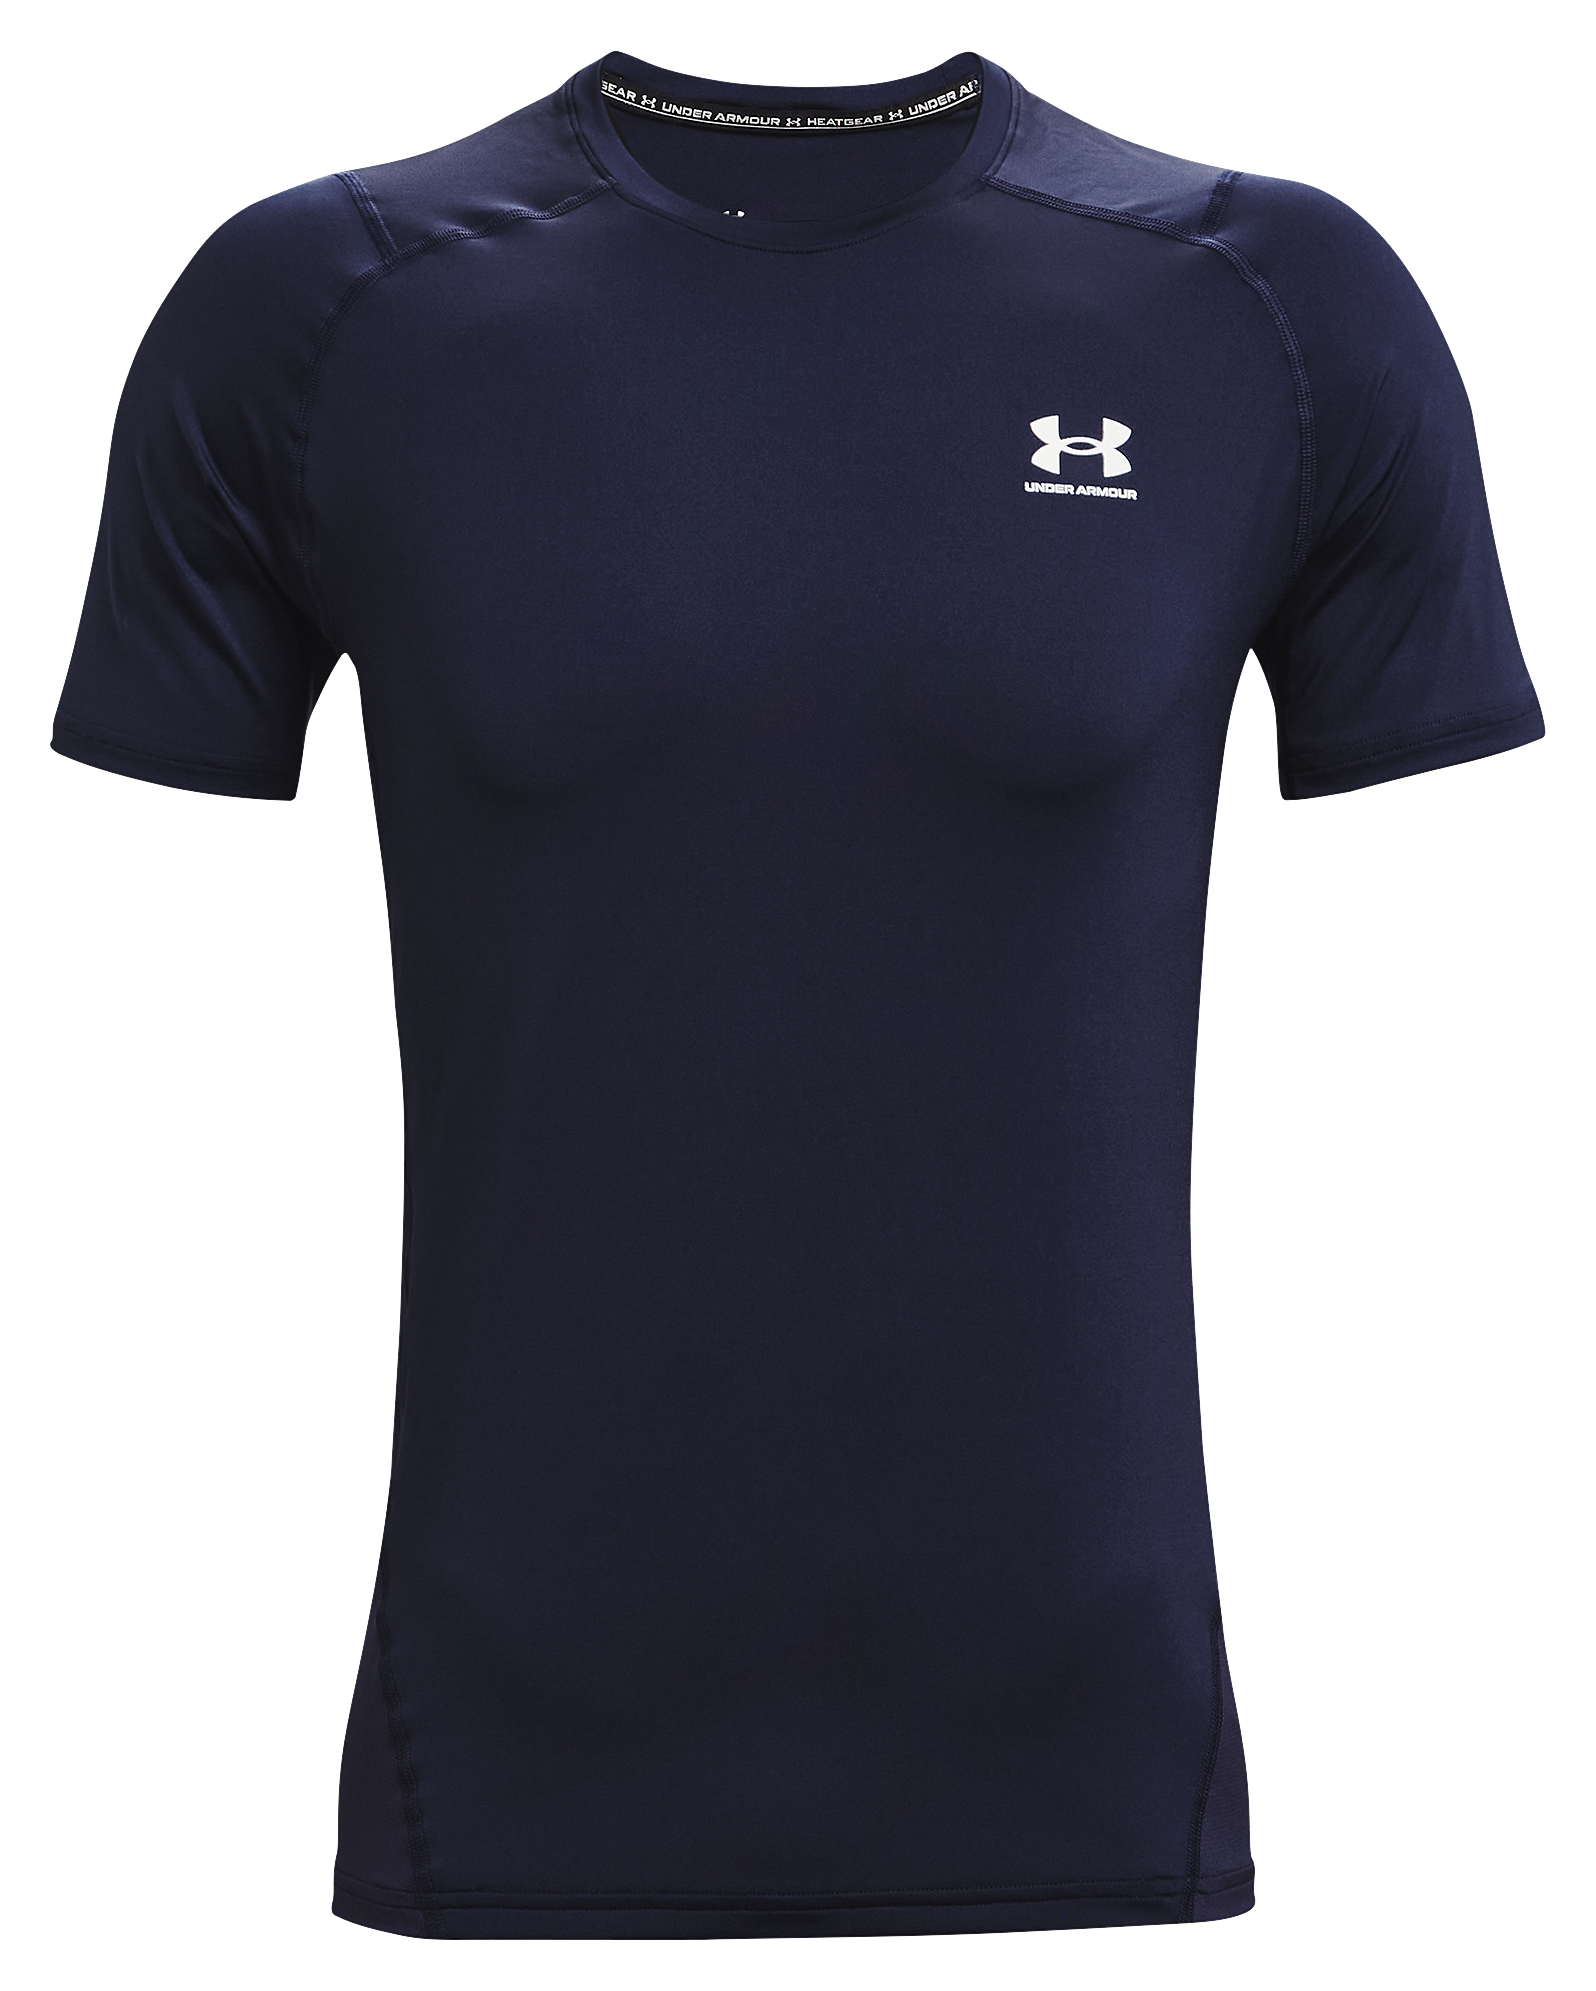 Under Armour HeatGear Fitted Short-Sleeve T-Shirt for Men - Midnight Navy - 4XL